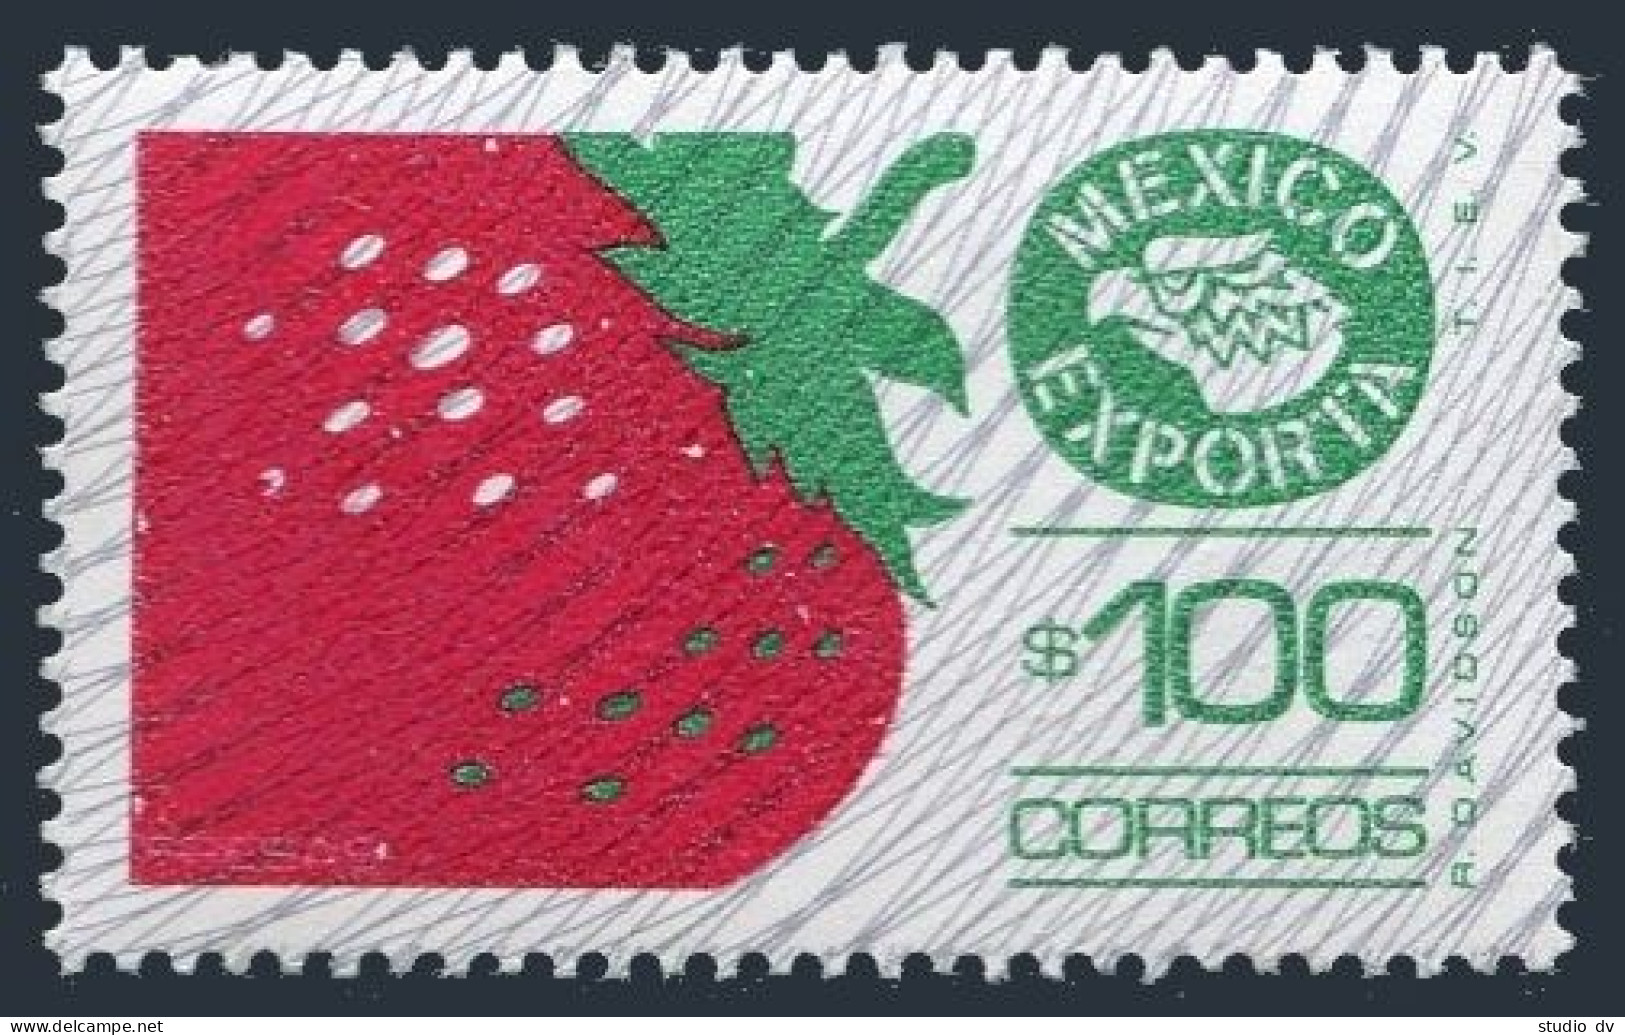 Mexico 1134,MNH.Michel 1803Aax. Mexico Exports,1983. Strawberry. - Mexico